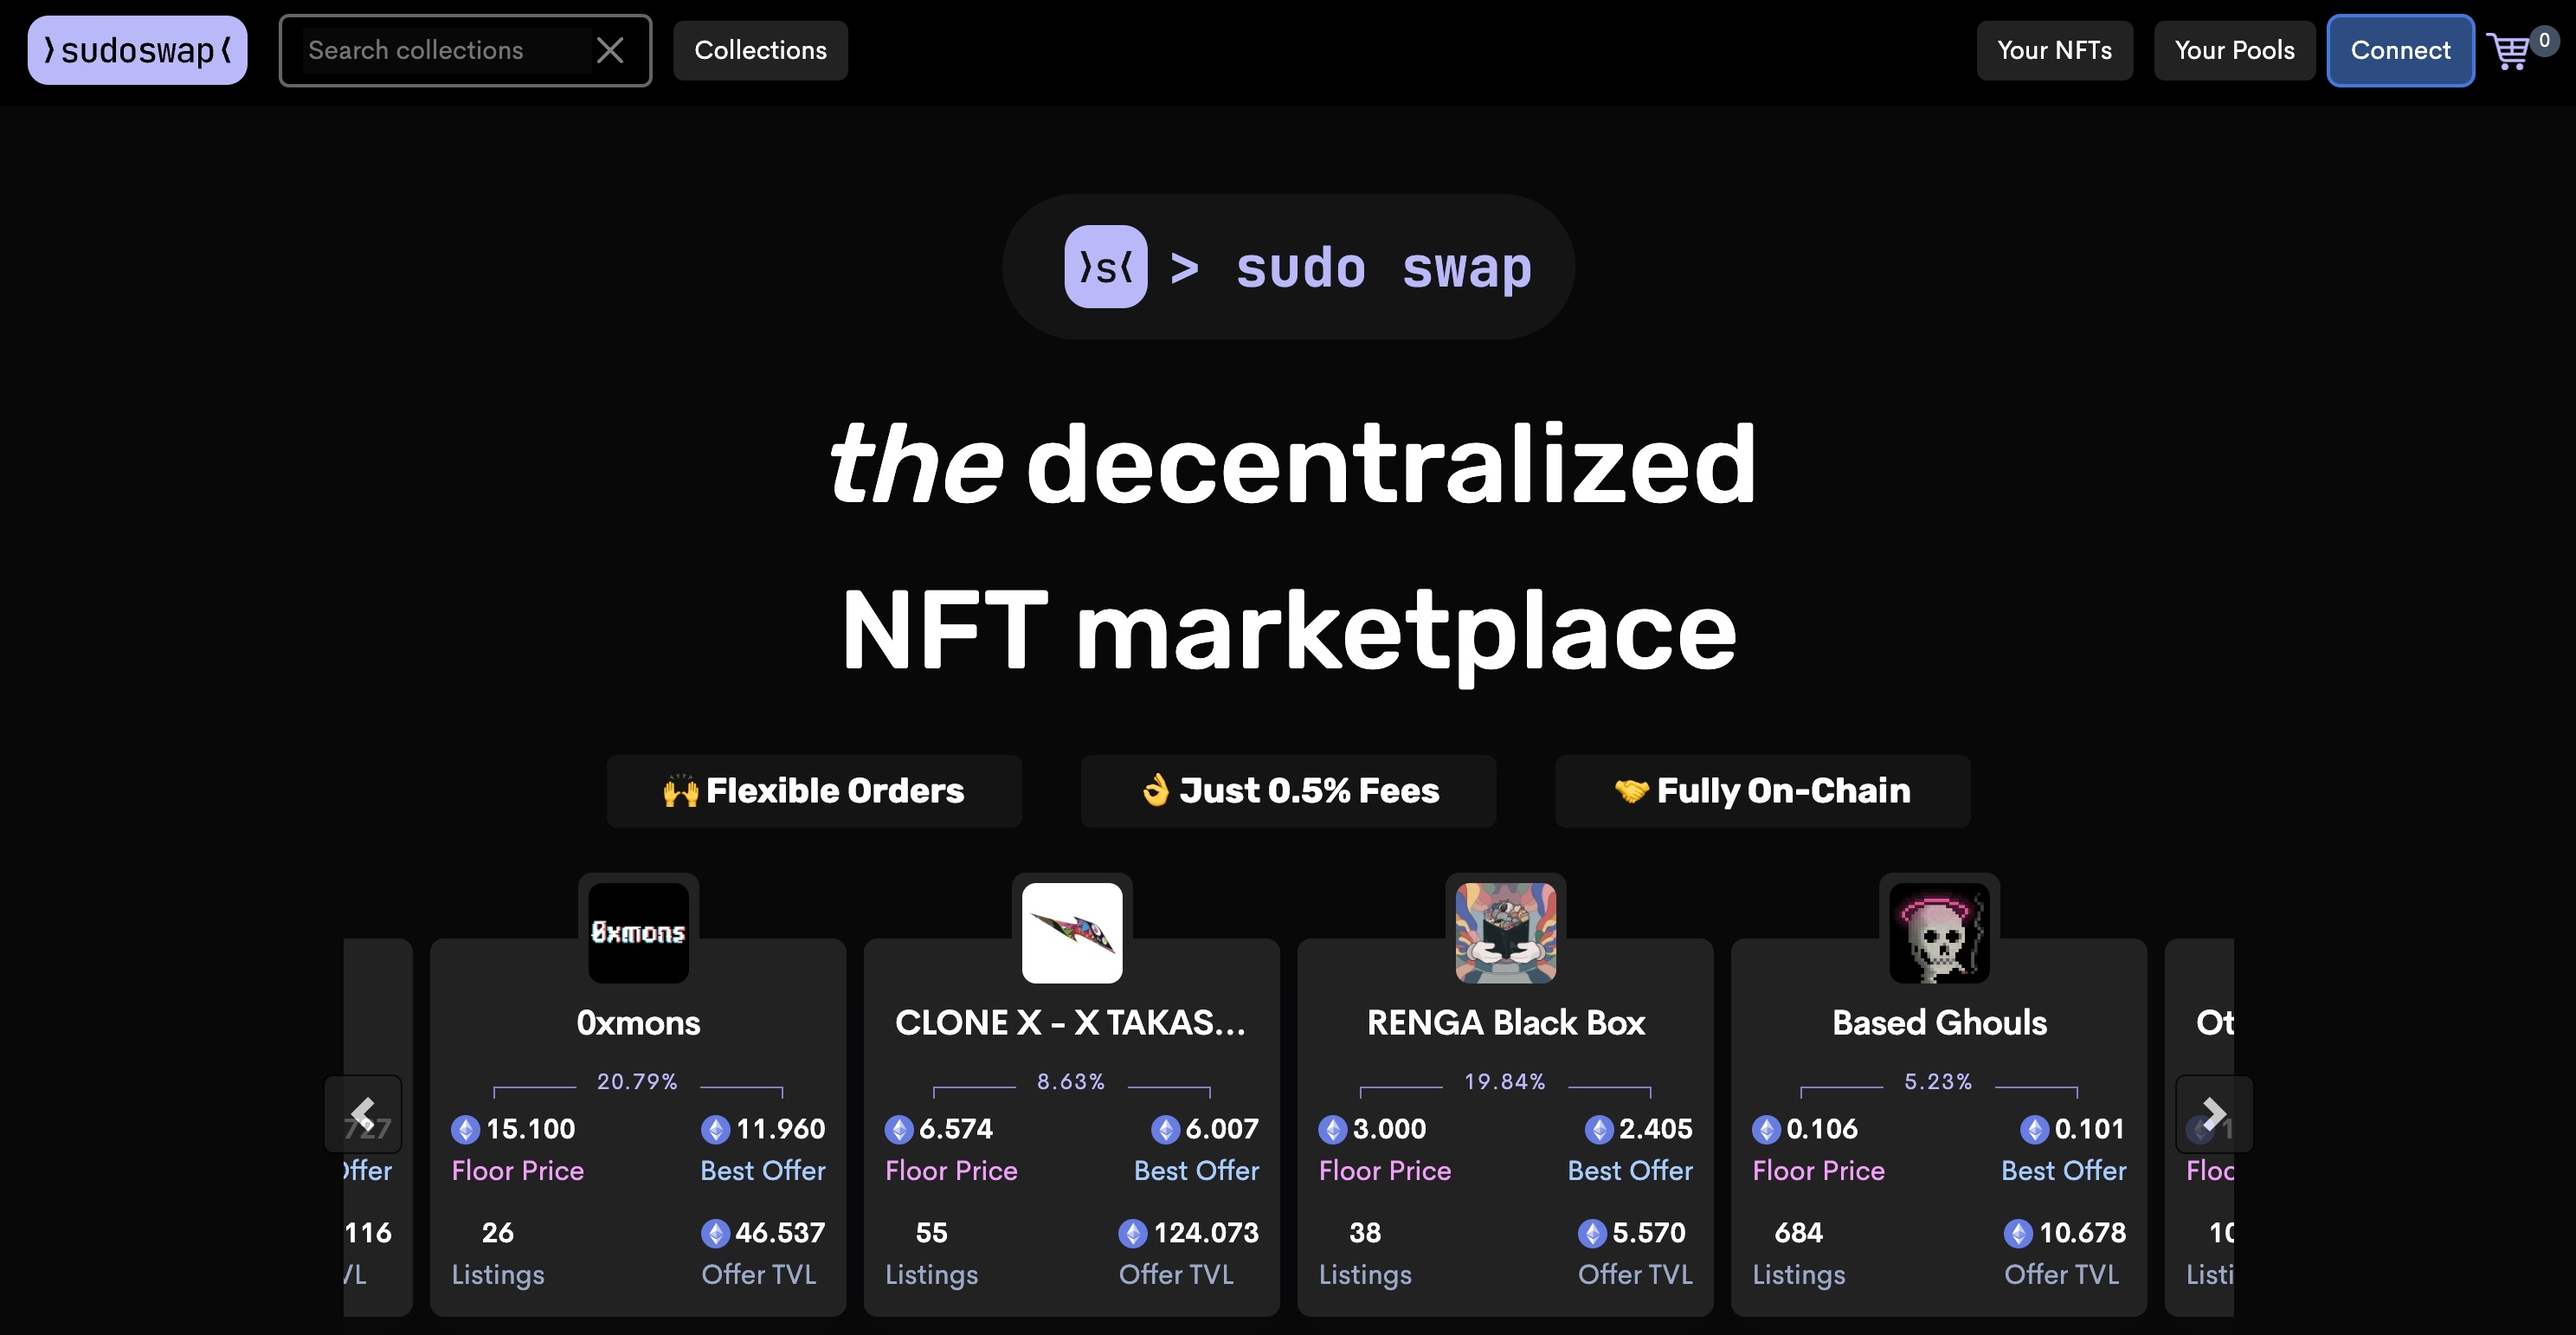 Sudoswap NFT marketplace